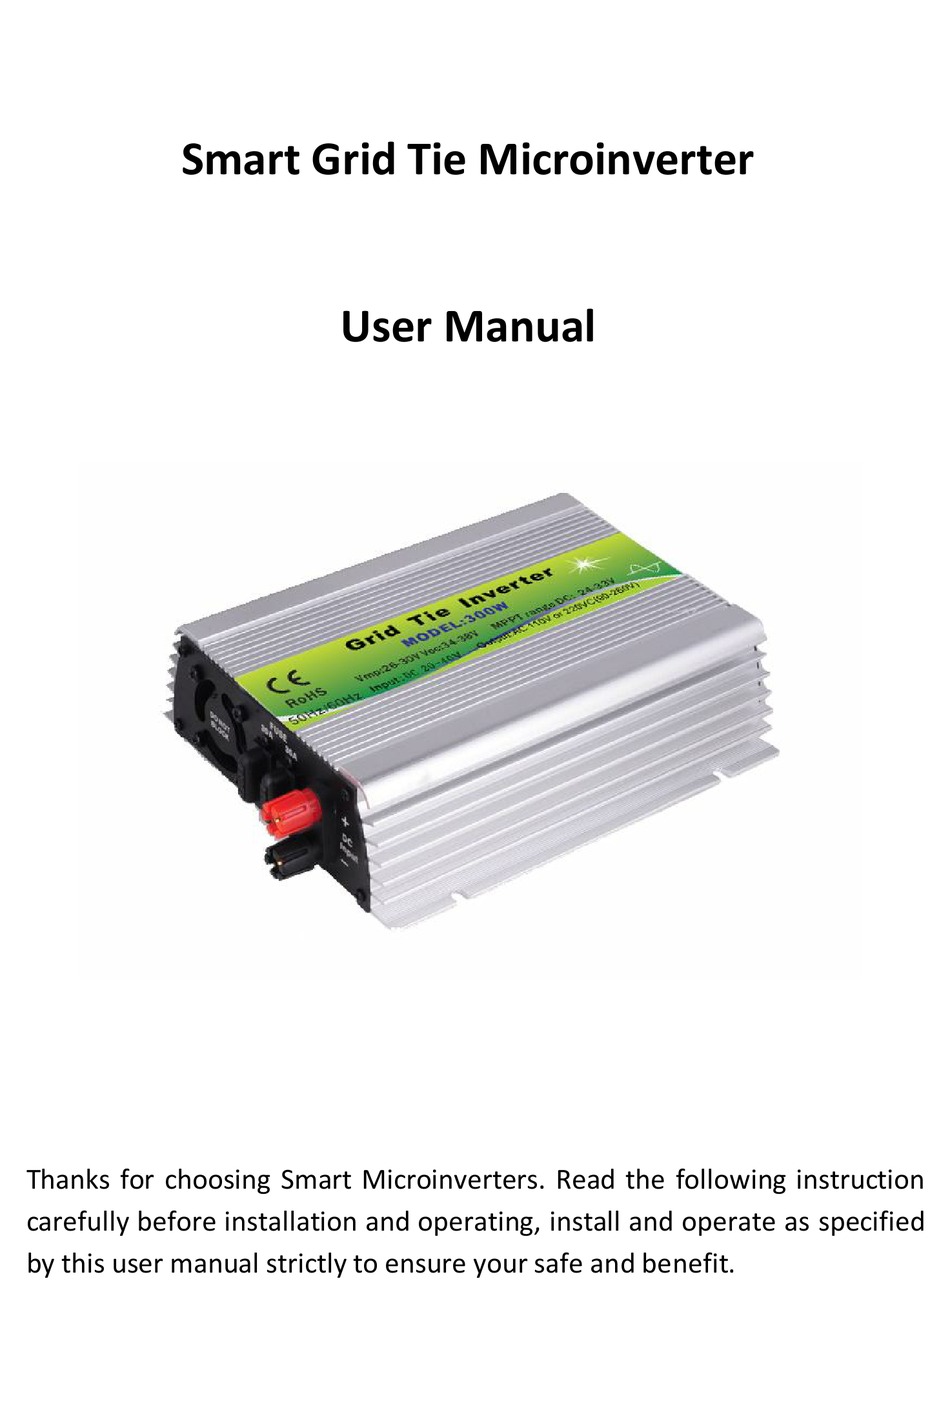 GRID TIE 500W USER MANUAL Pdf Download | ManualsLib